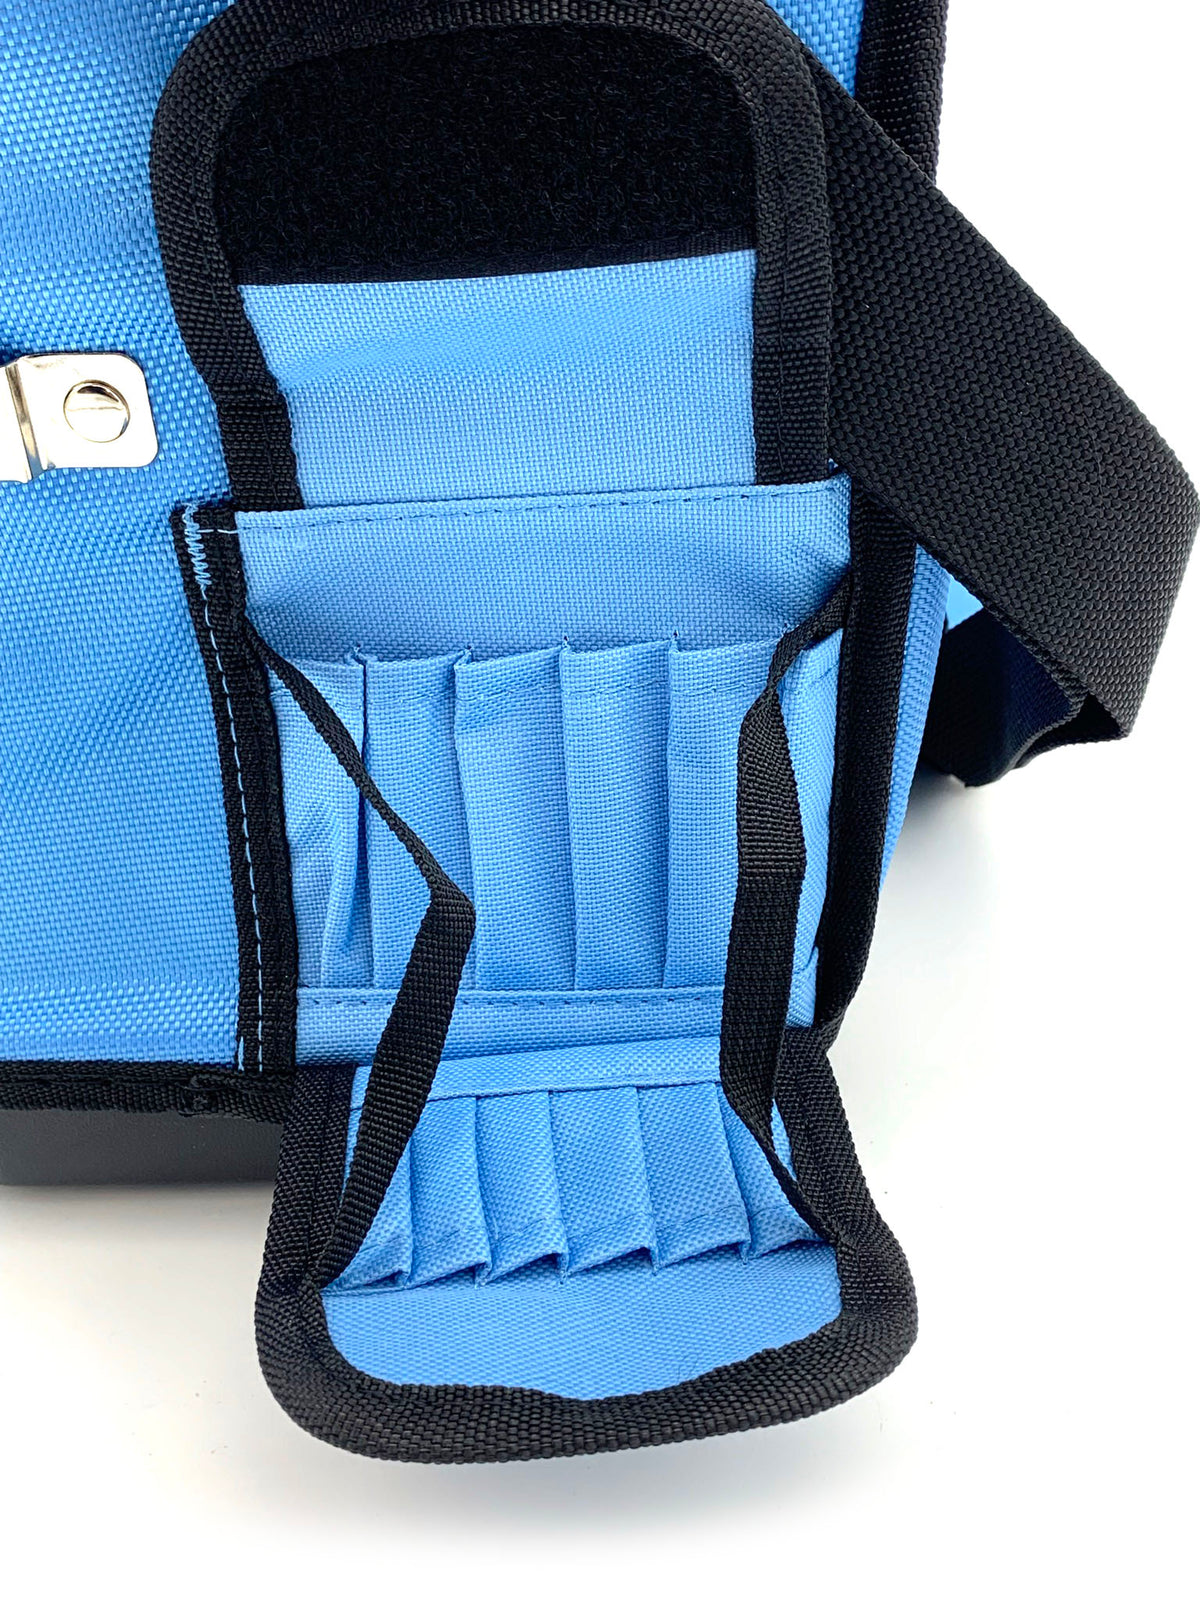 HVAC Premium Center Tray Tool Storage Tote Bag - 29 Pockets - Padded Handle - Hard Waterproof Base - With Comfortable Shoulder Strap - Medium